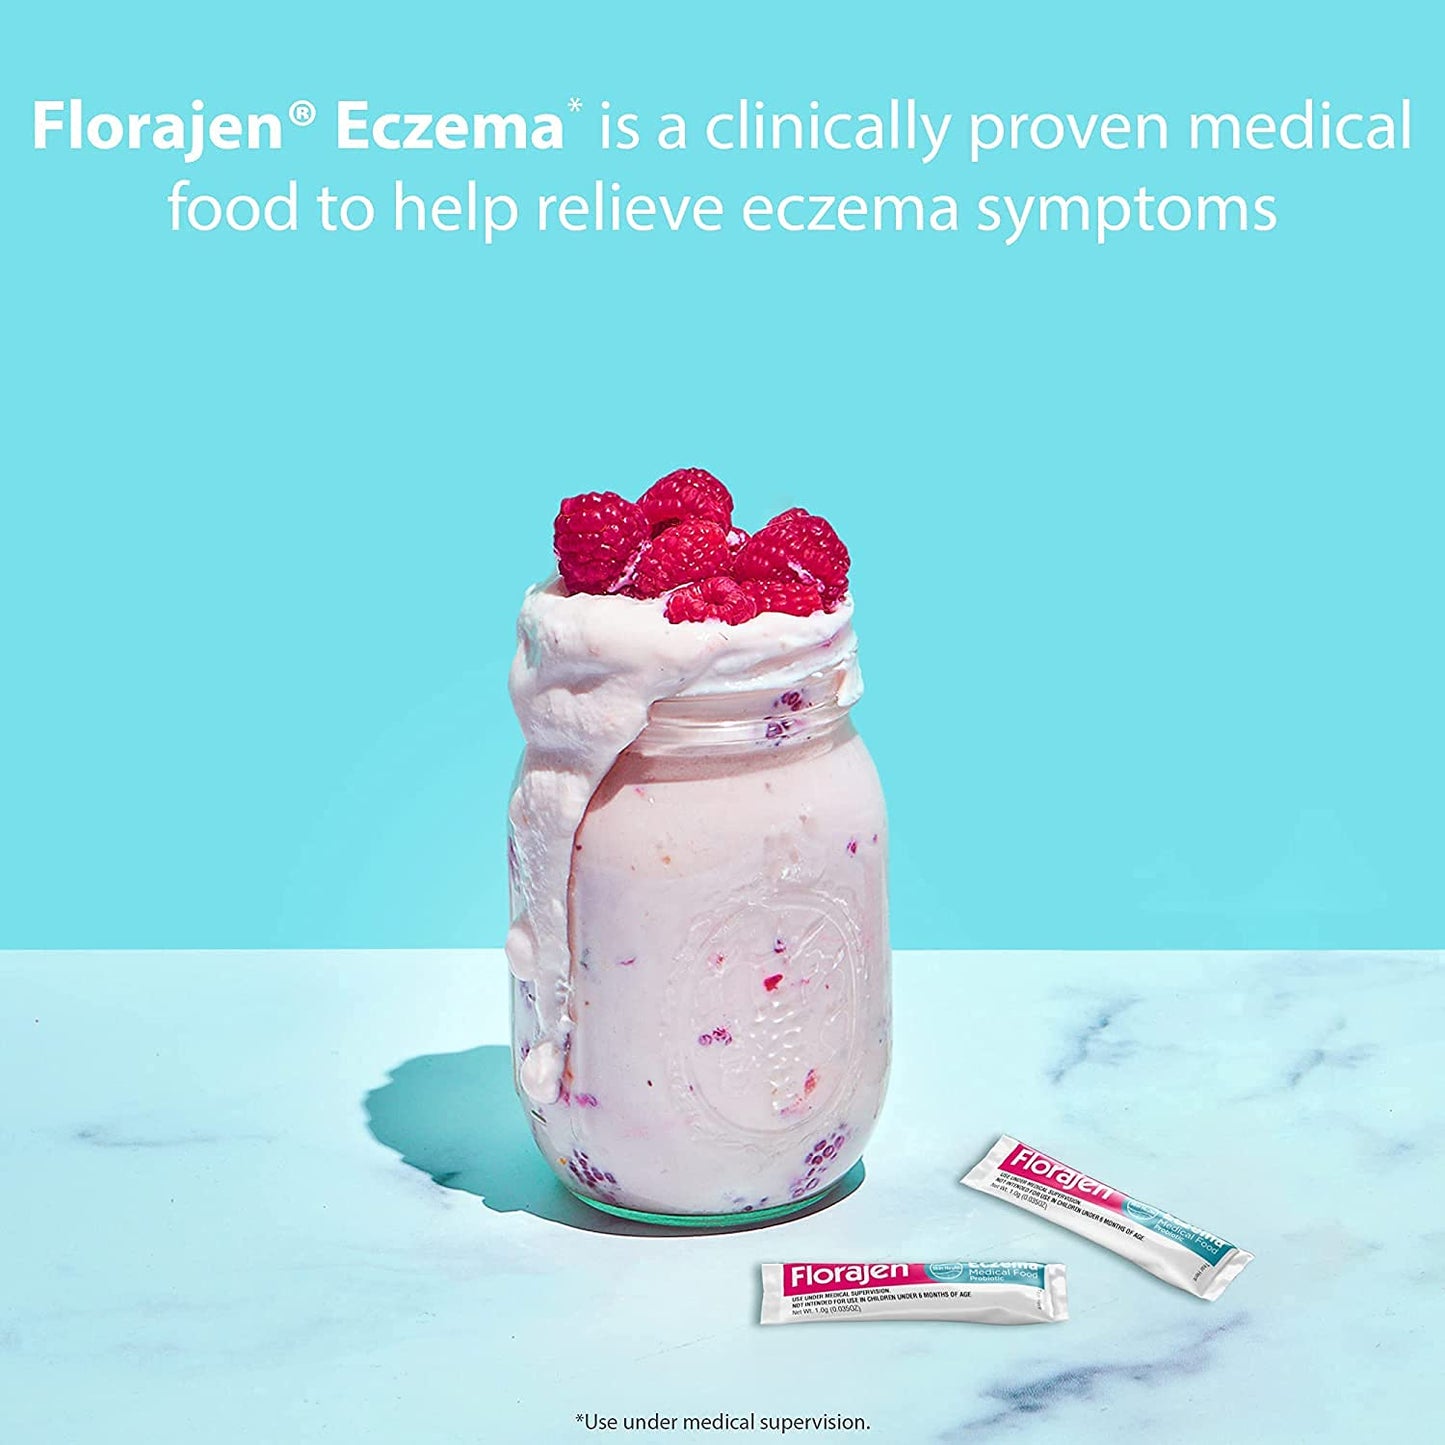 Florajen Eczema Medical Food Probiotic, Dietary Management Of Atopic Dermatitis, 30 Count